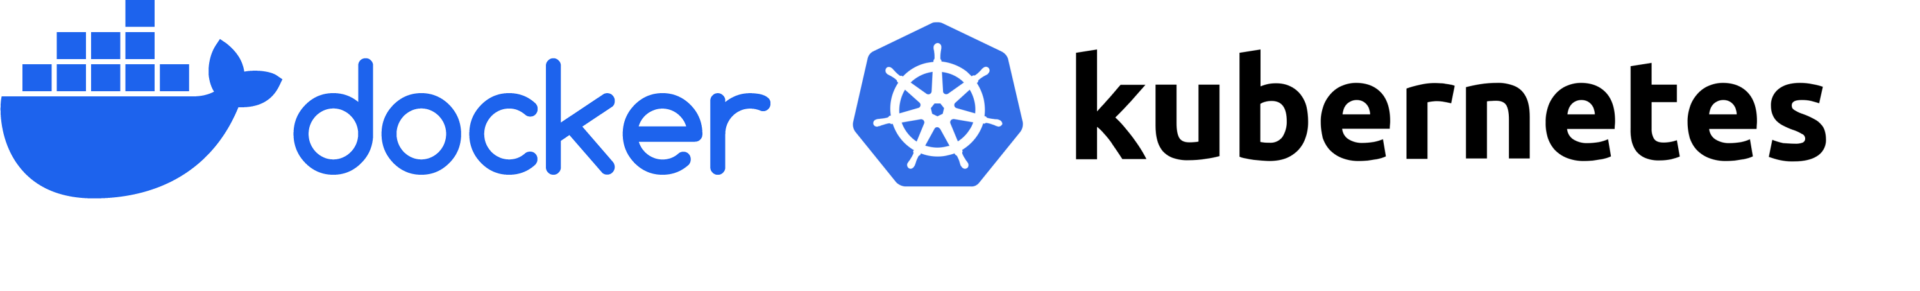 Docker + Kubernetes のロゴ